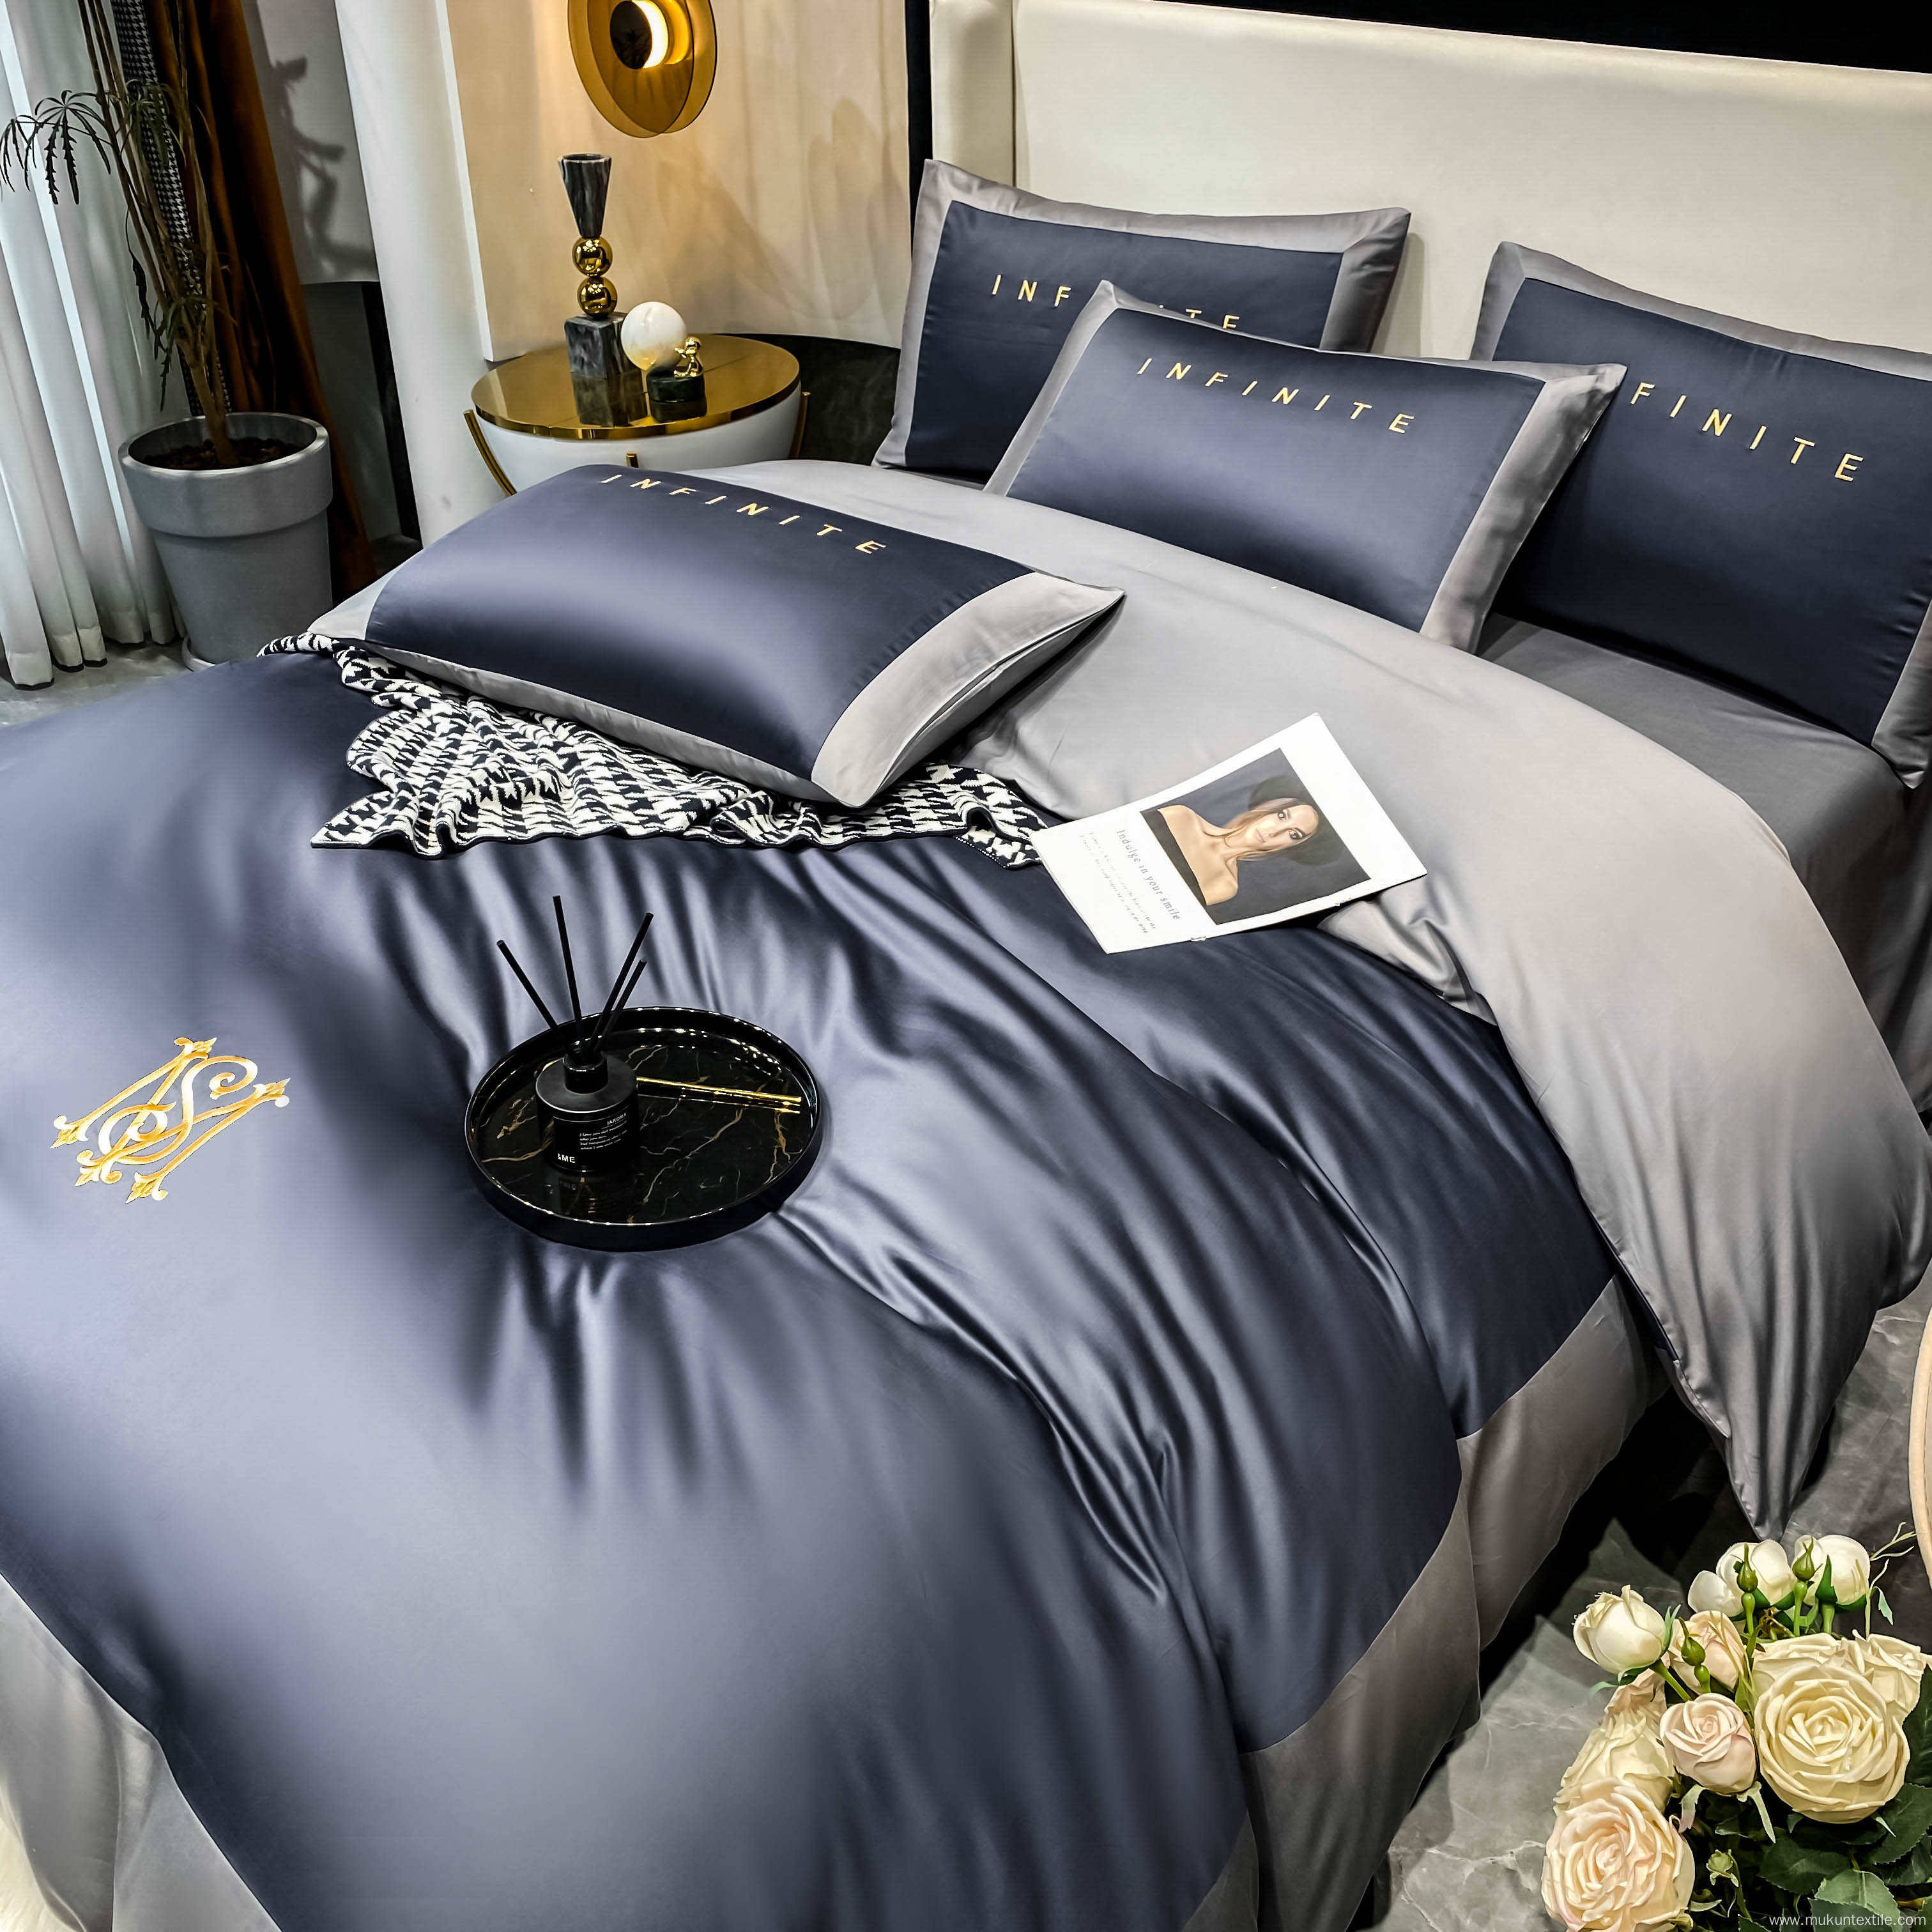 Luxury bedding sets egyptian cotton bedding set